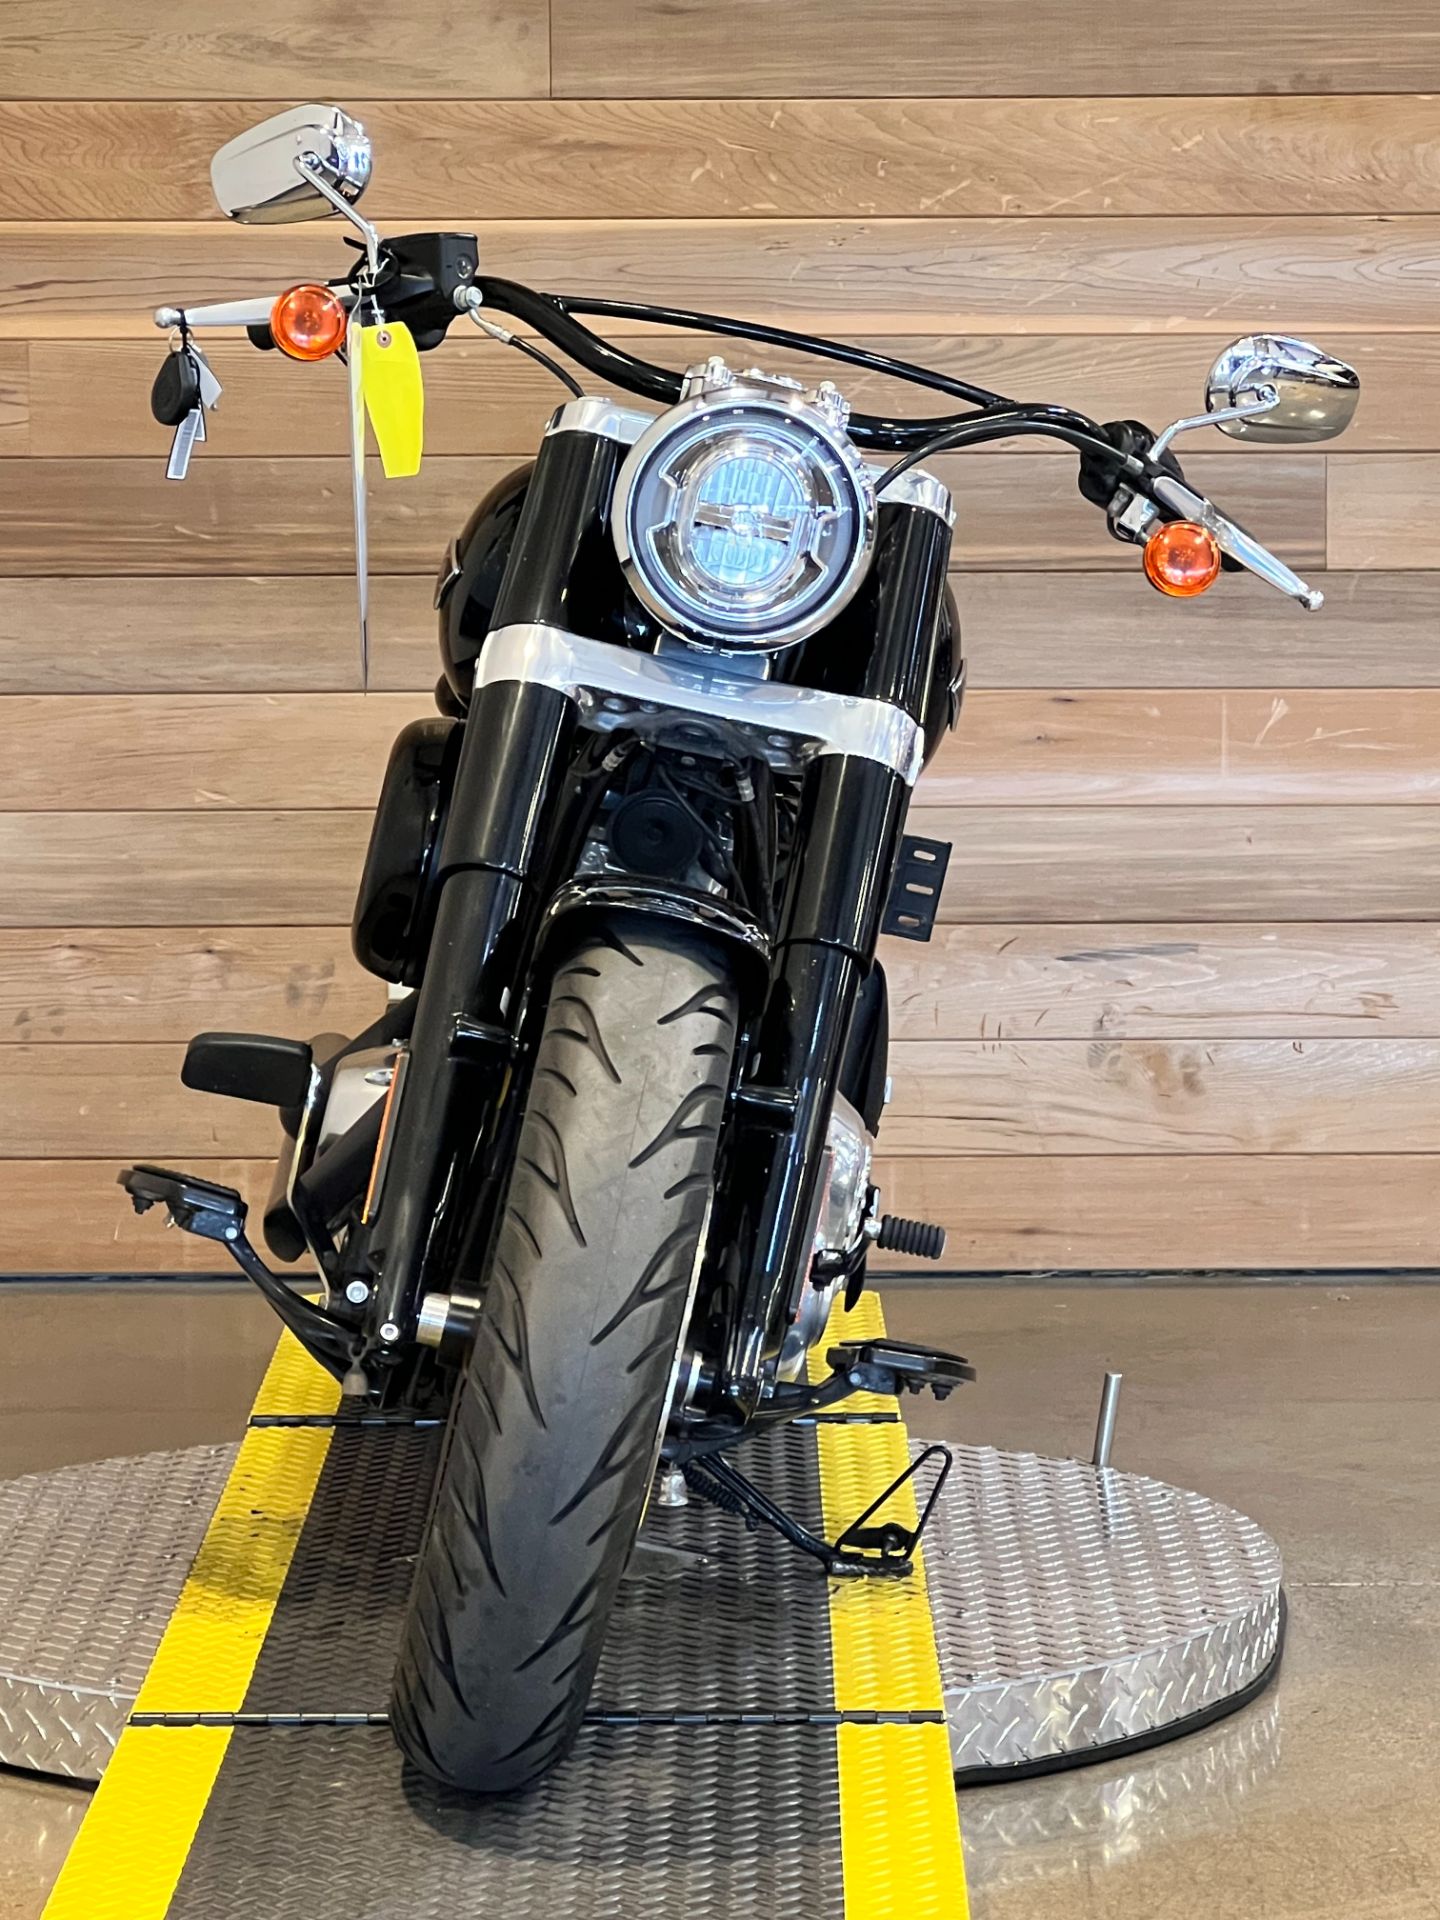 2019 Harley-Davidson Softail Slim® in Salem, Oregon - Photo 3